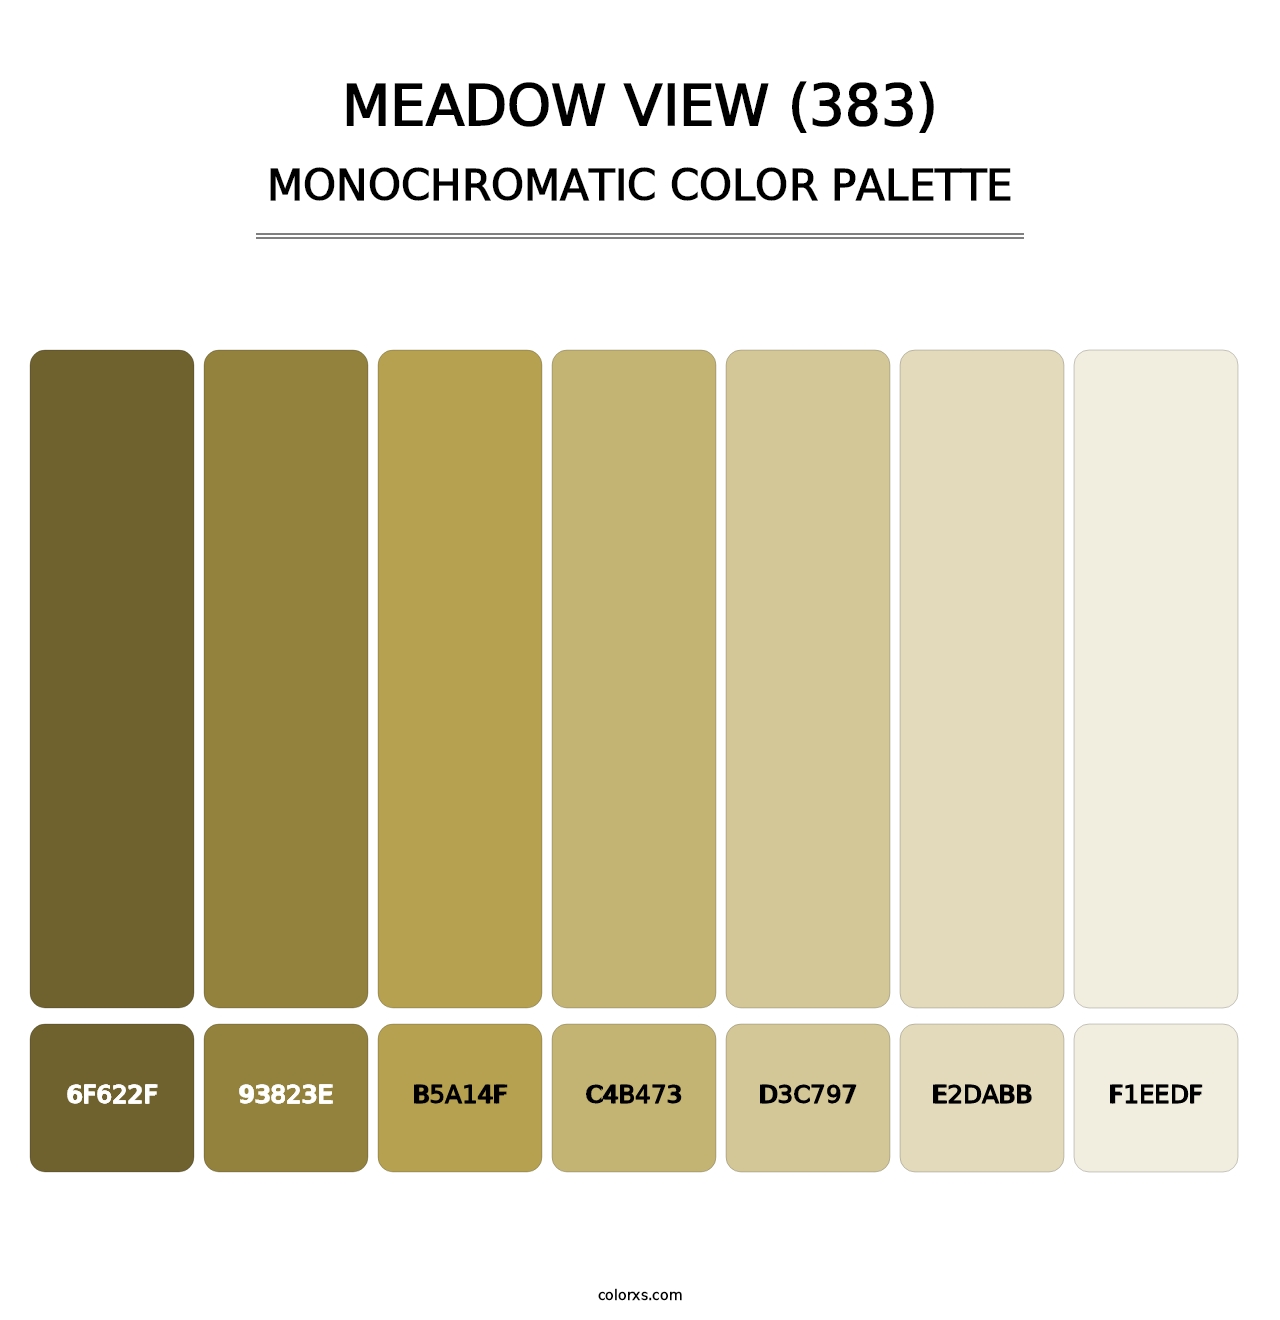 Meadow View (383) - Monochromatic Color Palette